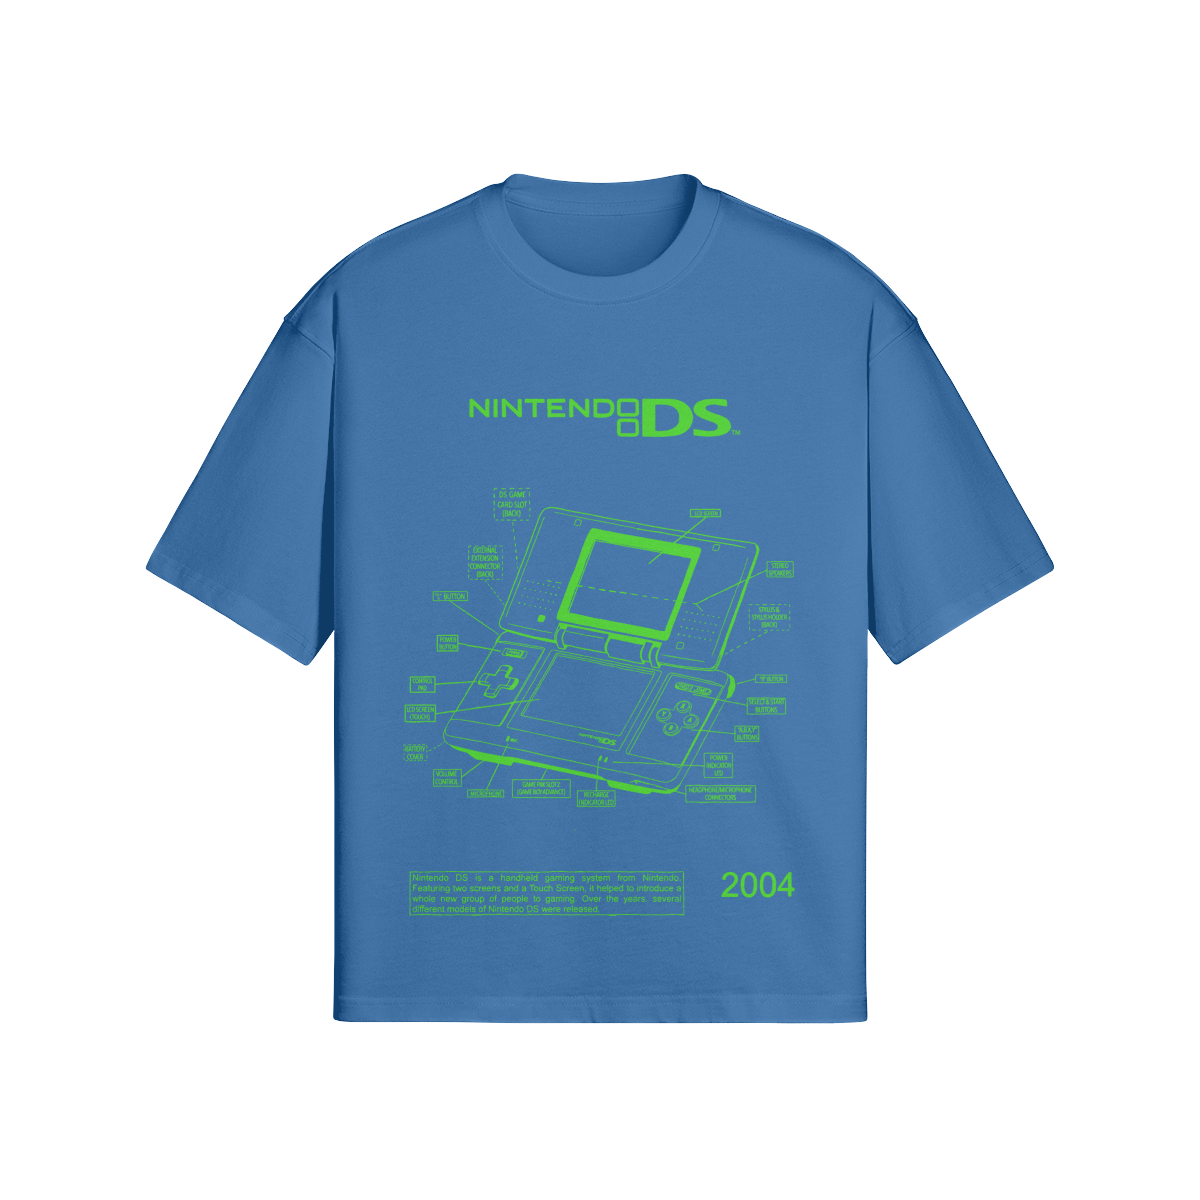 Nintendo DS Patent T-shirt